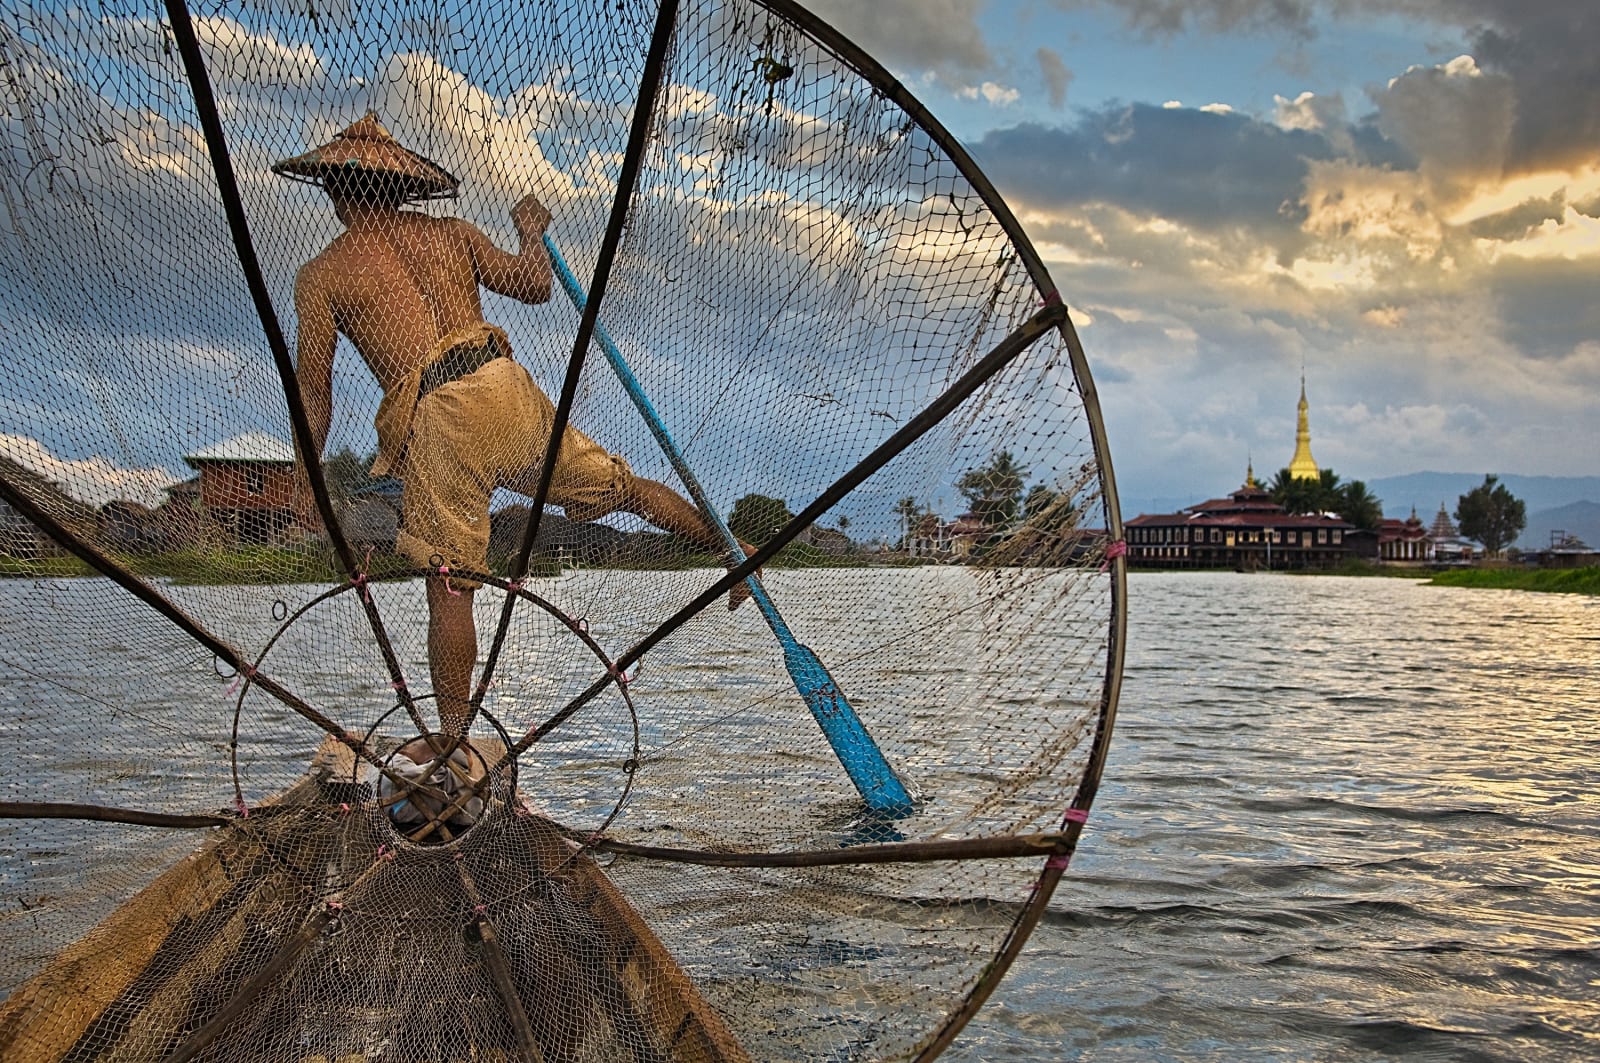 Steve McCurry, Fisherman in Inle Lake, Burma/Myanmar, 2008